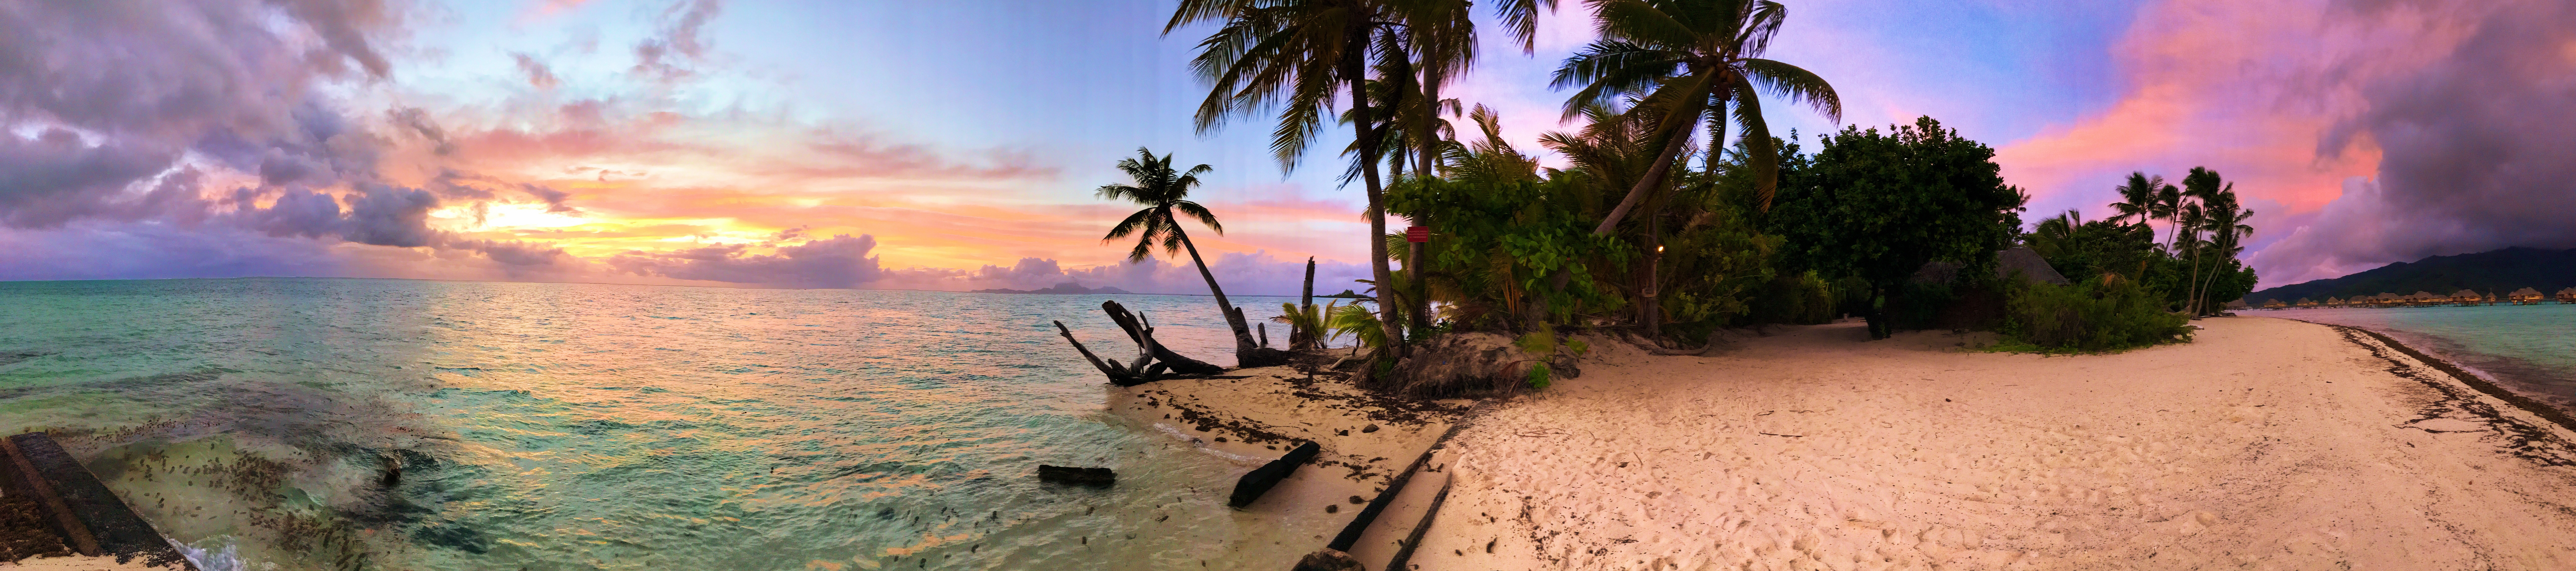  Our Tahiti Trip - Travel To Tahiti - Le Taha'a Resort + Spa, Relais Chateaux - French Polynesia Vacation - Overwater Bungalows - Trip to Tahiti - Bora Bora - Communikait by Kait Hanson